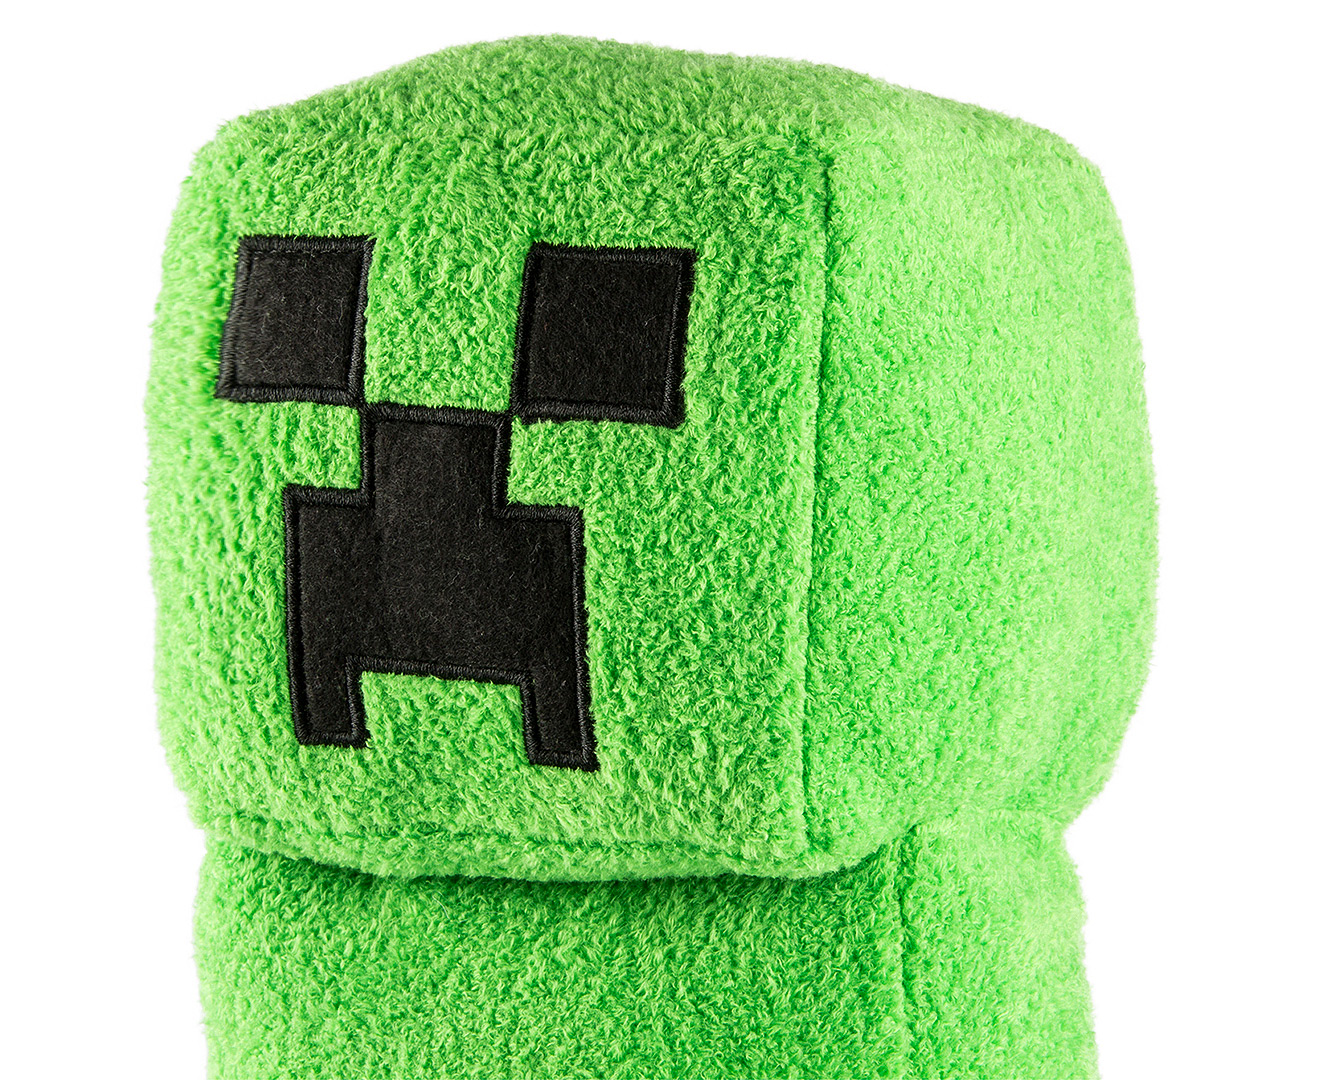 Minecraft Creeper Plush Toy with Sound Catch.com.au.